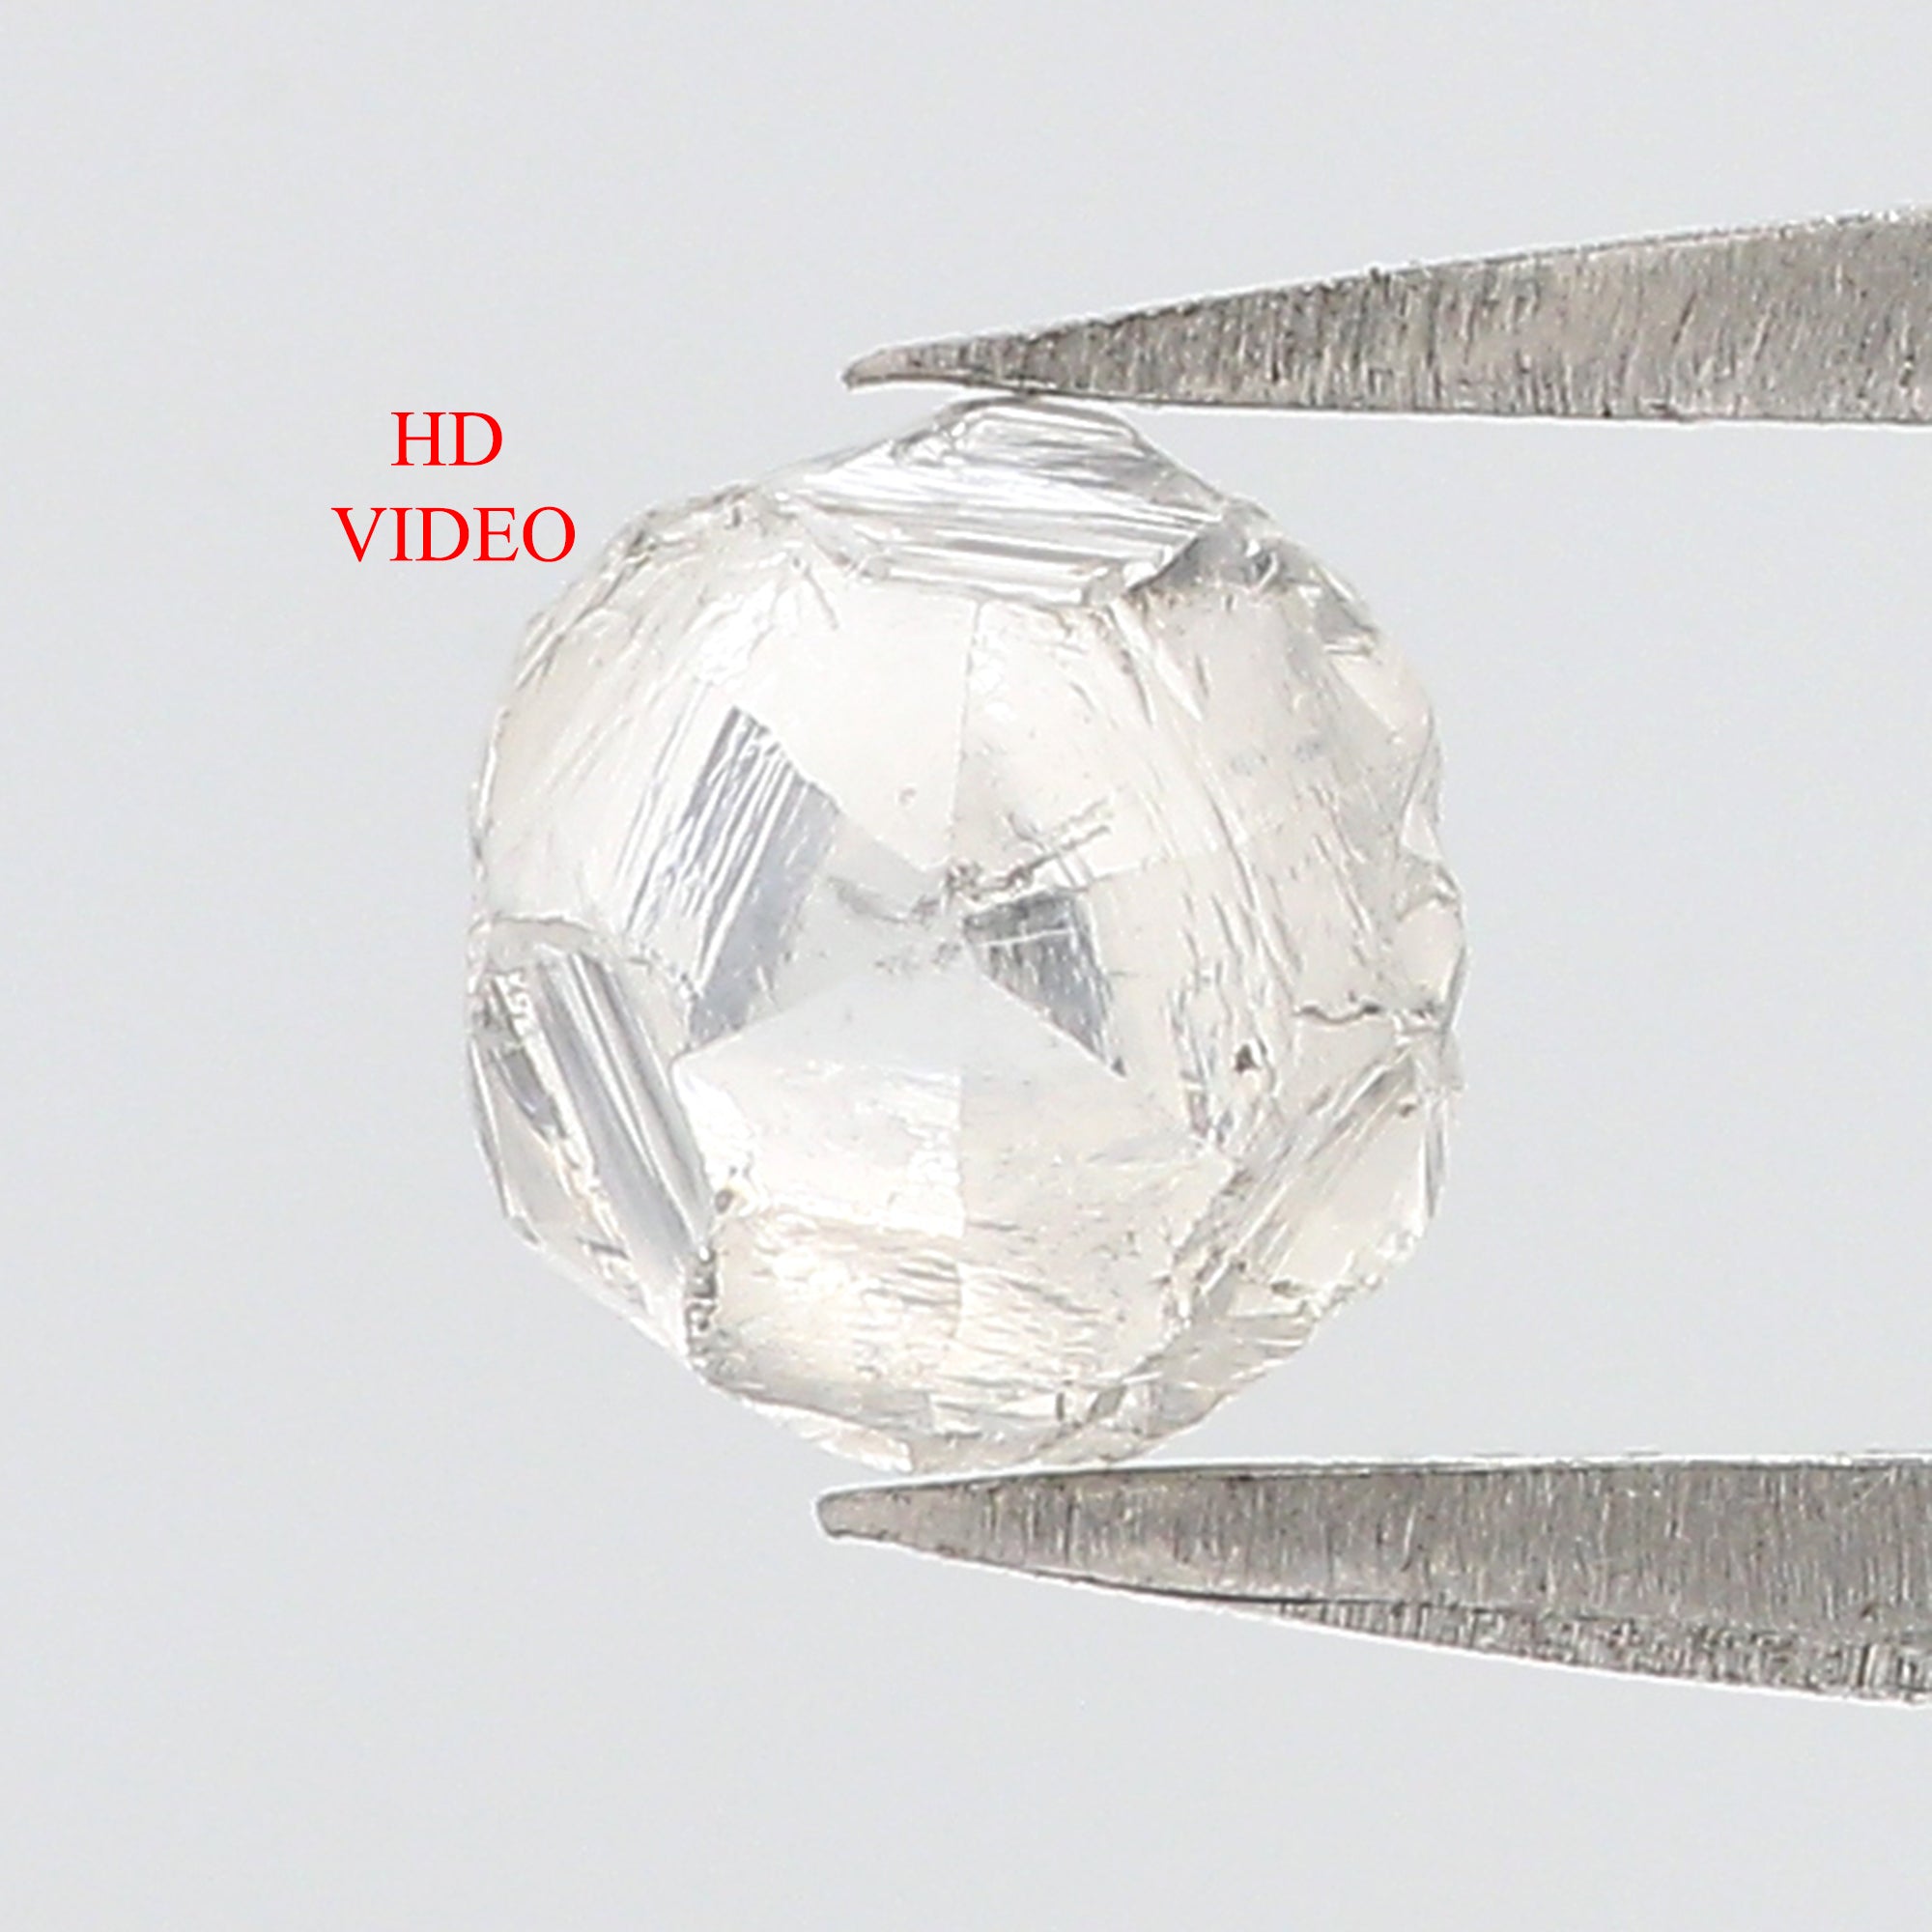 1.14 CT Natural Loose Rough Shape Diamond White Color Rough Diamond 5.80 MM Natural Loose White Diamond Rough Irregular Cut Diamond QL3111